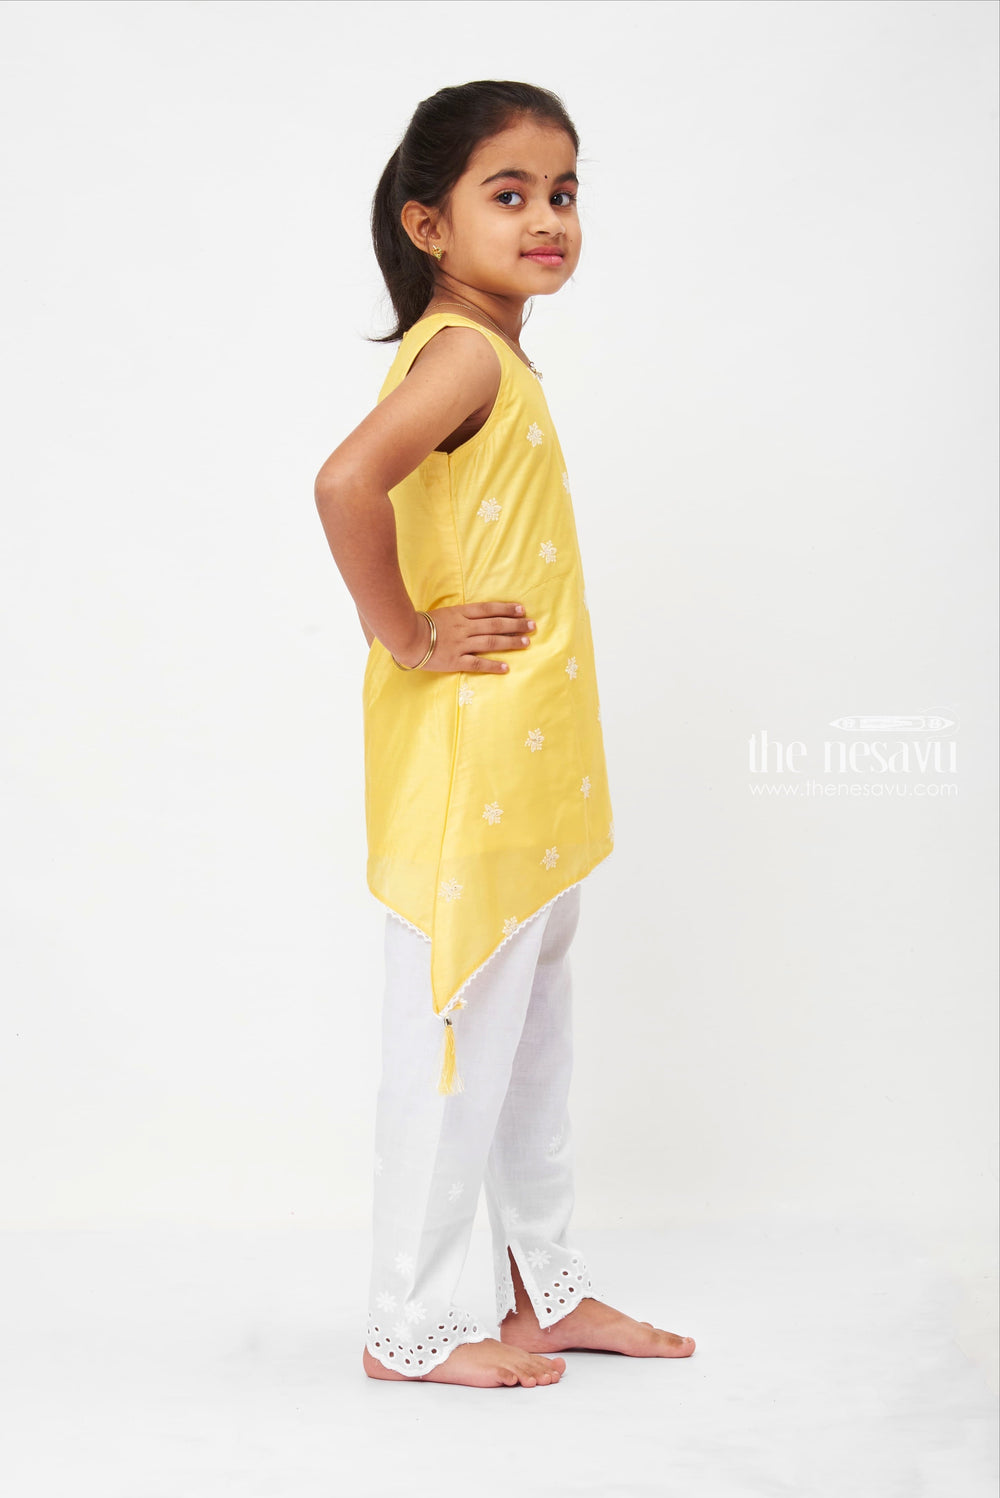 The Nesavu Girls Sharara / Plazo Set Summer Breeze Yellow Tunic with White Embroidered Pant Set Nesavu Designer Palazzo Set for Girls | Festive Crop Top Outfit | The Nesavu